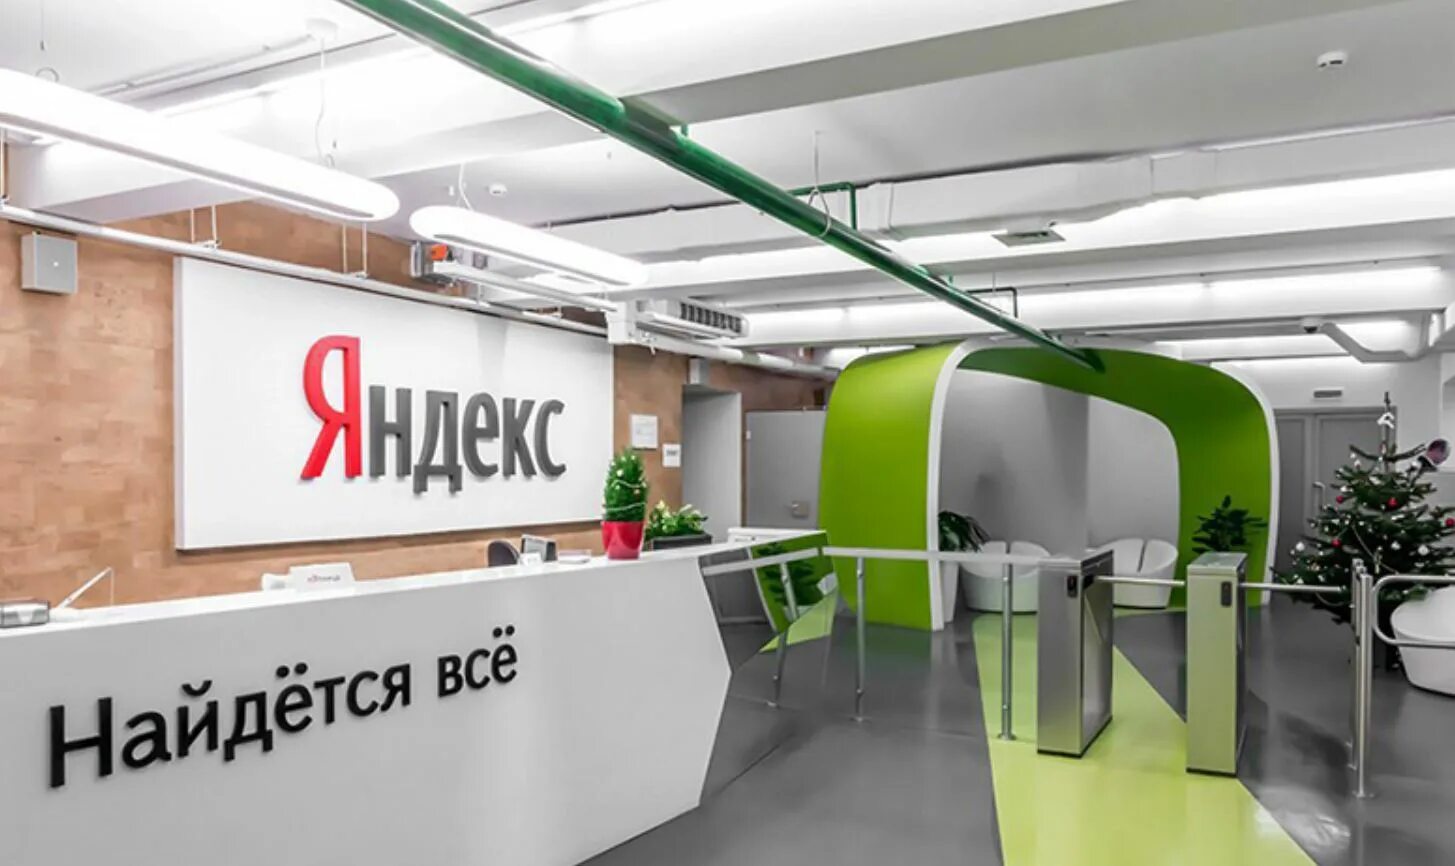 Офис Яндекса в Москве. Слоган яндекса